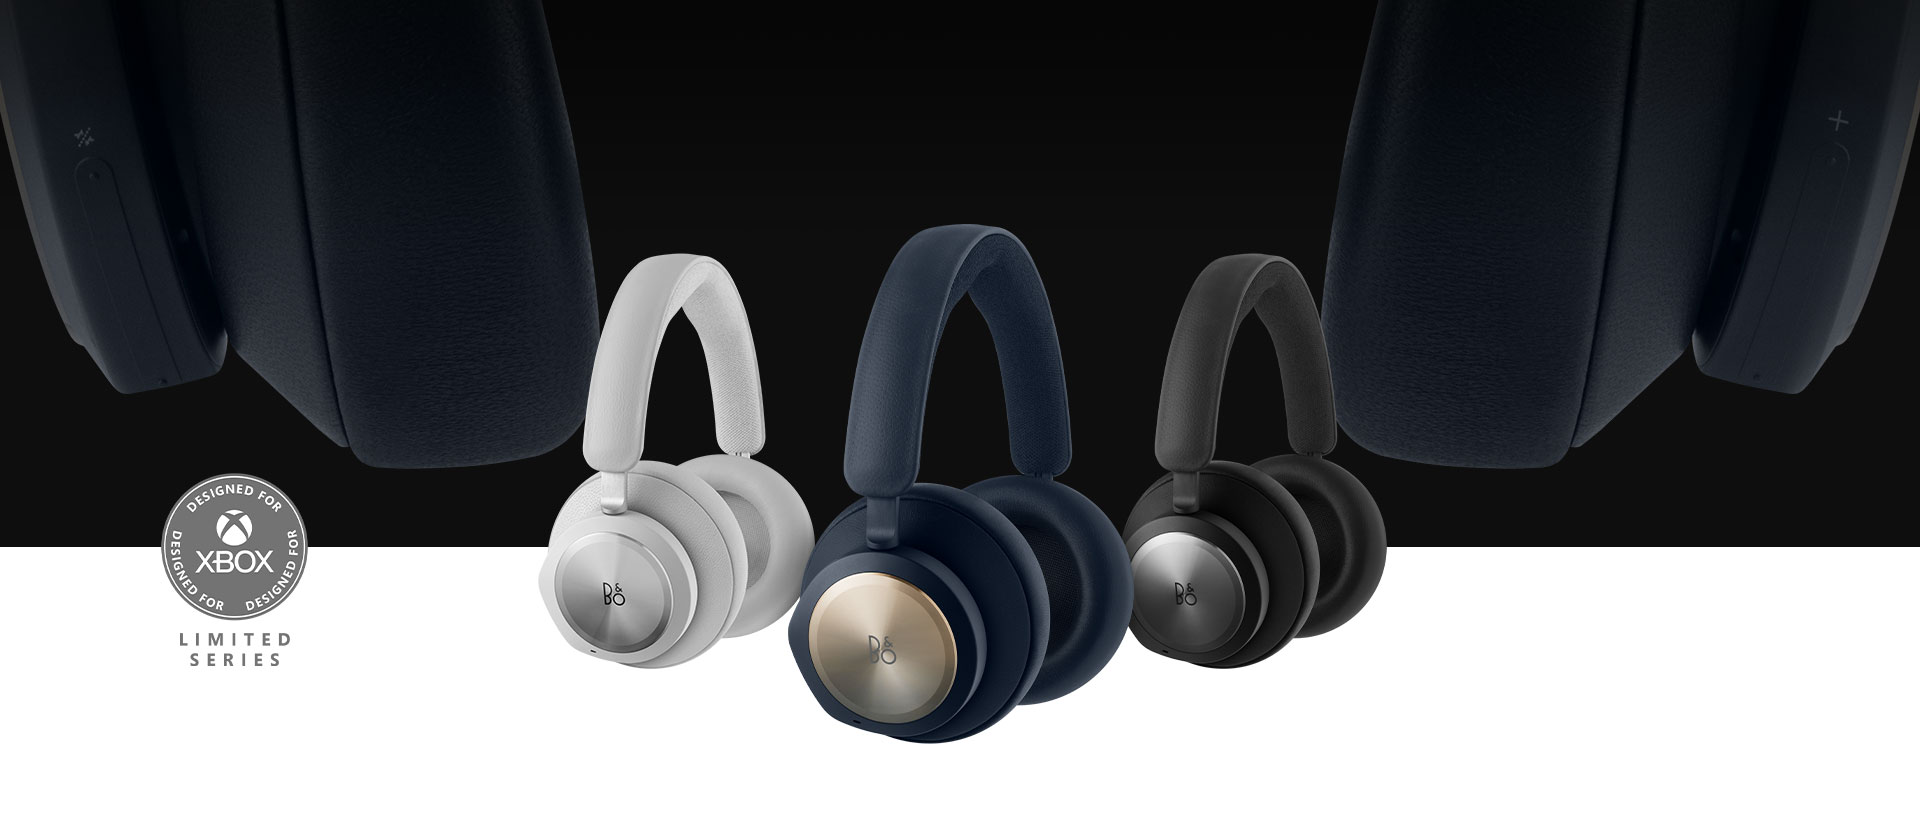 Designed for Xbox，Band and Olufsen 海軍藍耳機在前方，後方是黑色和灰色耳機